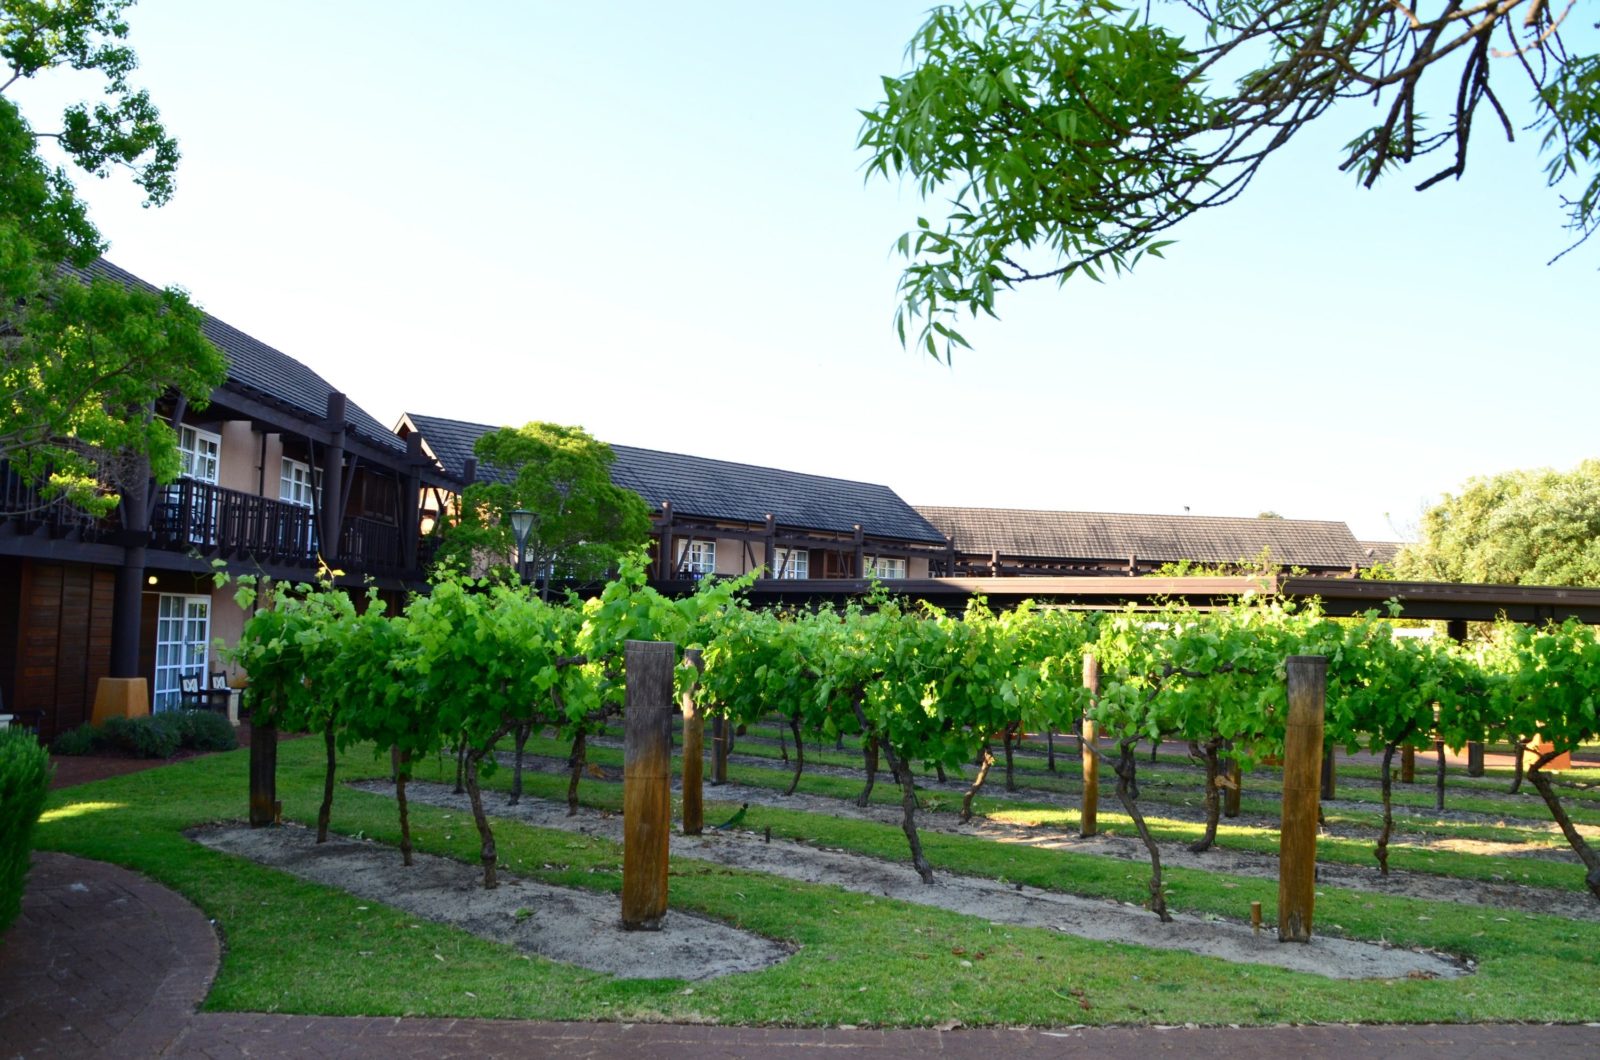 Novotel Vines Resort, Swan Valley, Western Australia